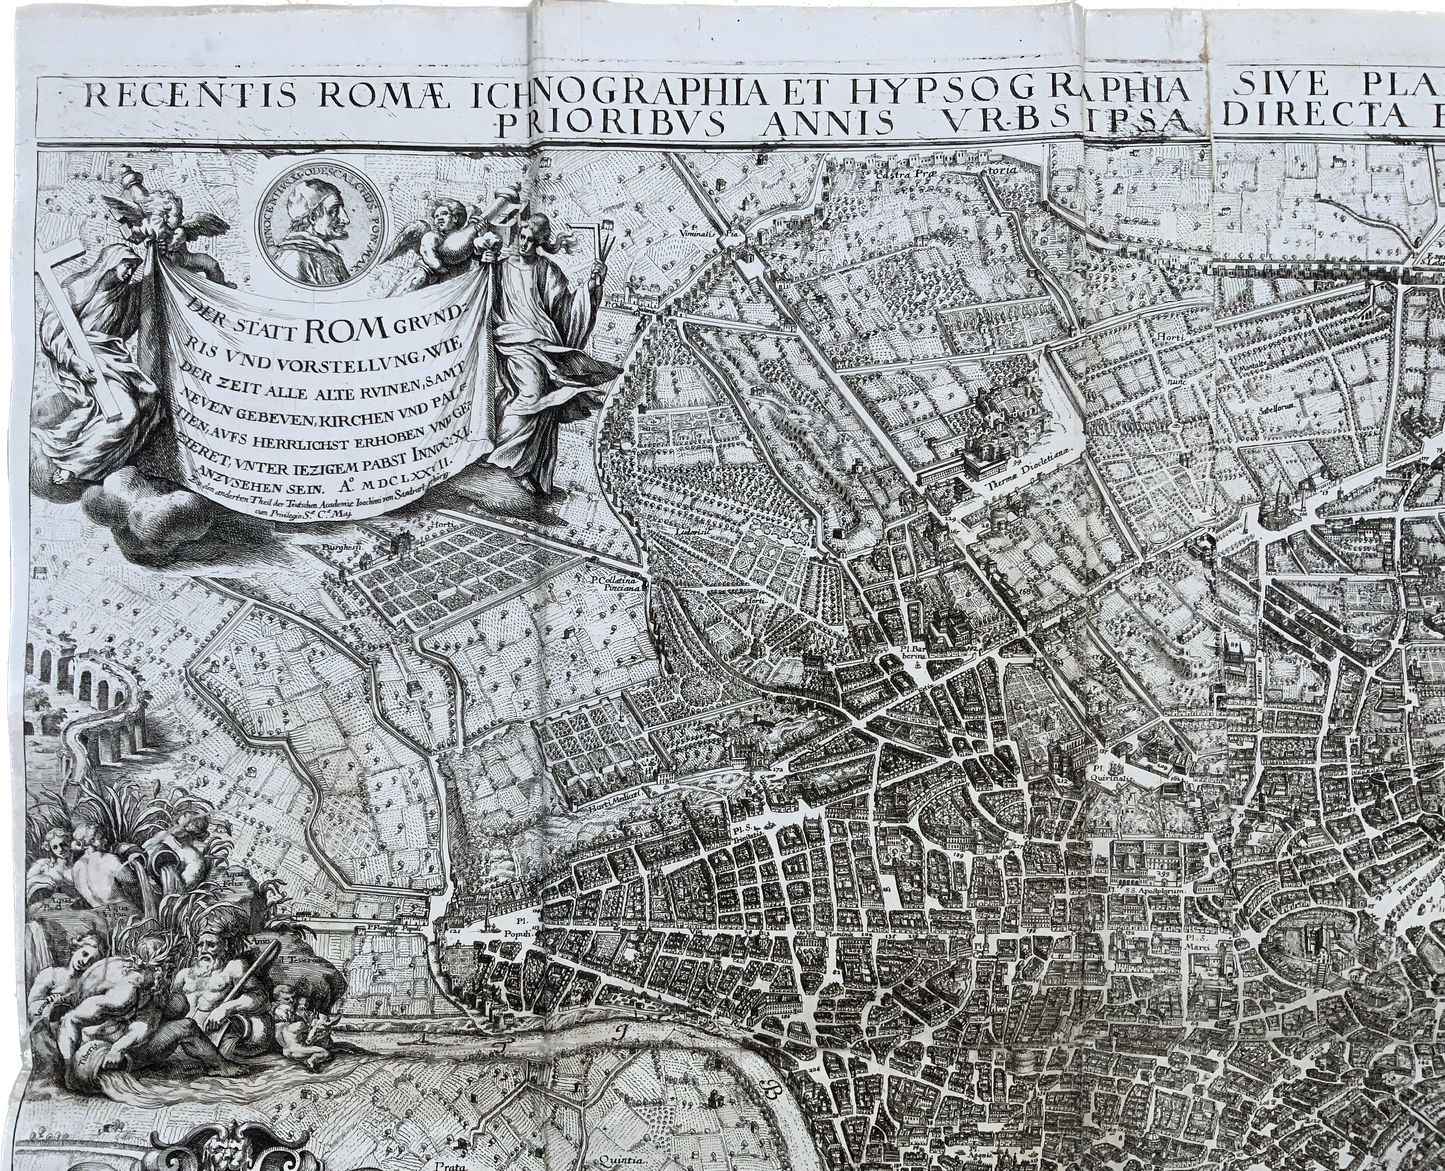 1679 Falda / Sandrart, Recentis Romae Ichnographia, engraved map / plan of Rome, 67 x 86 cm